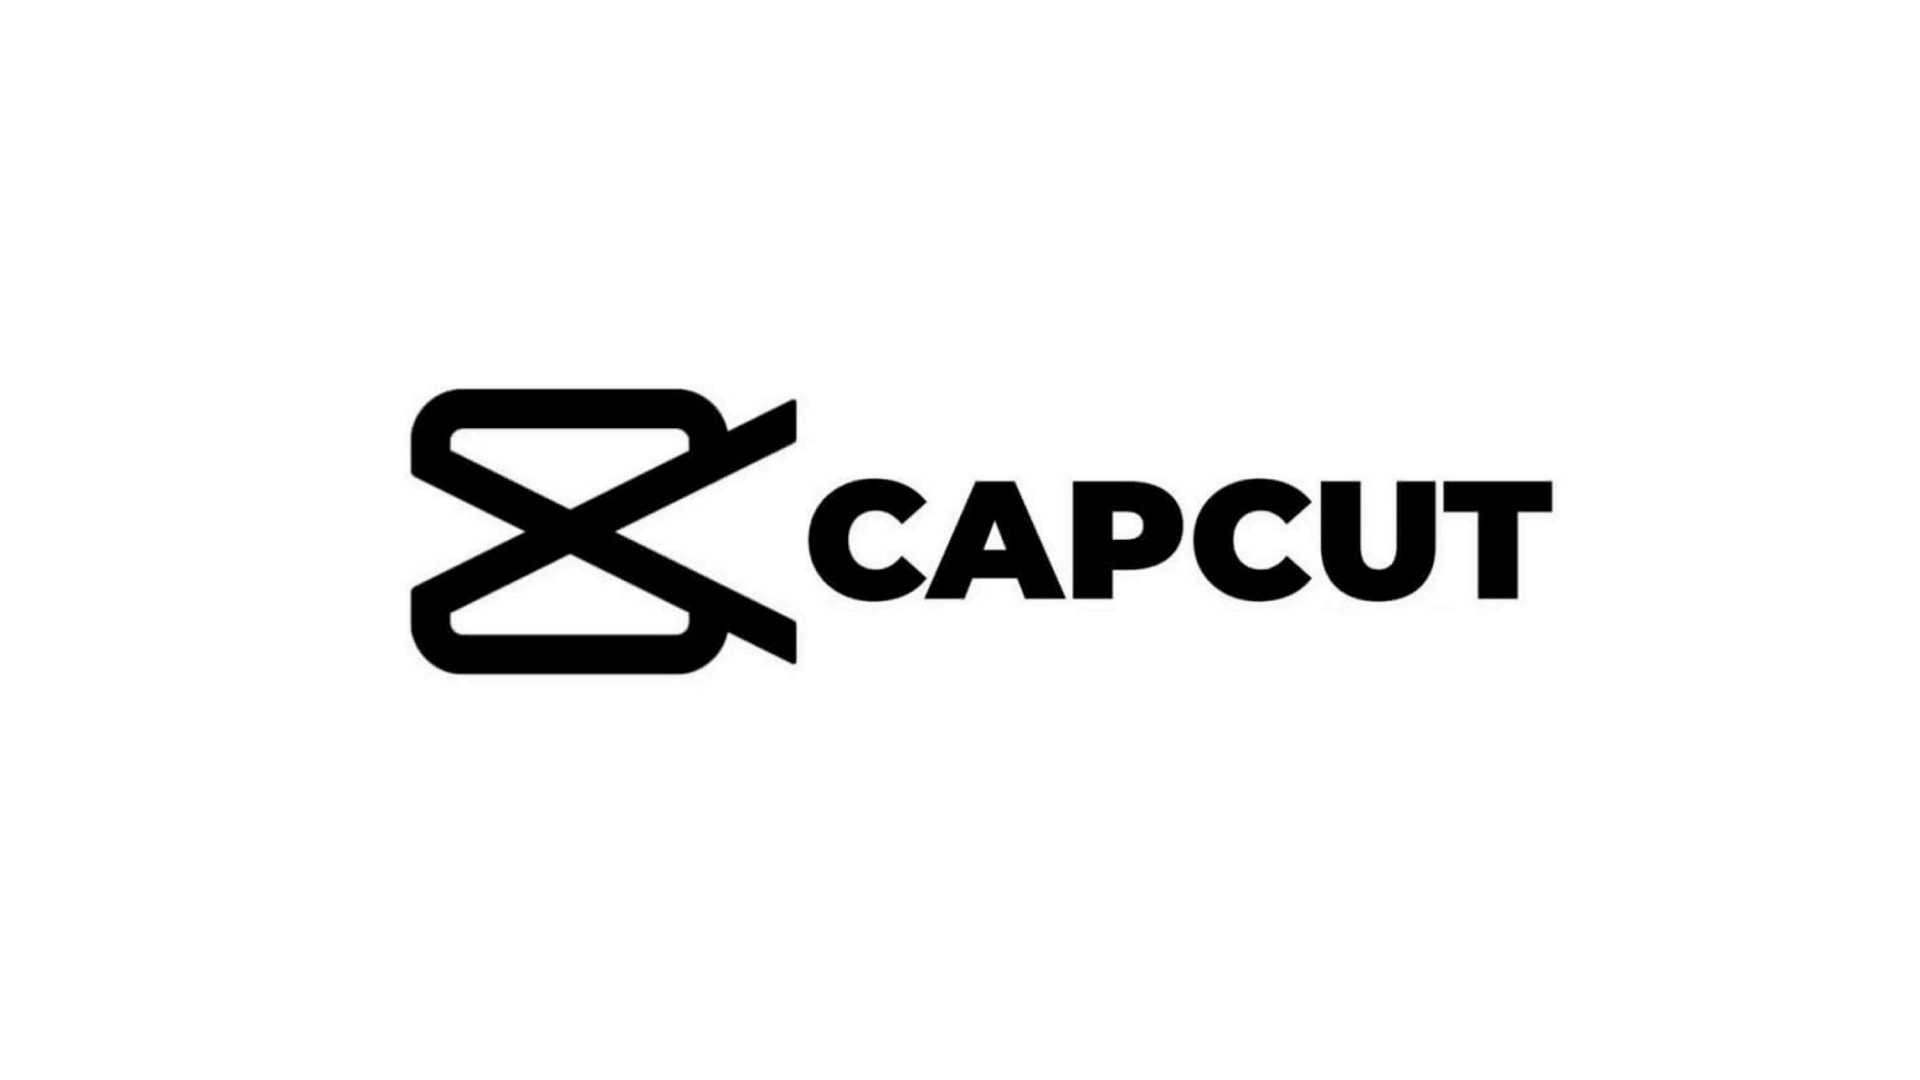 Capcut музыка. CAPCUT. CAPCUT лого. Значле CAPCUT. Картинки для CAPCUT.